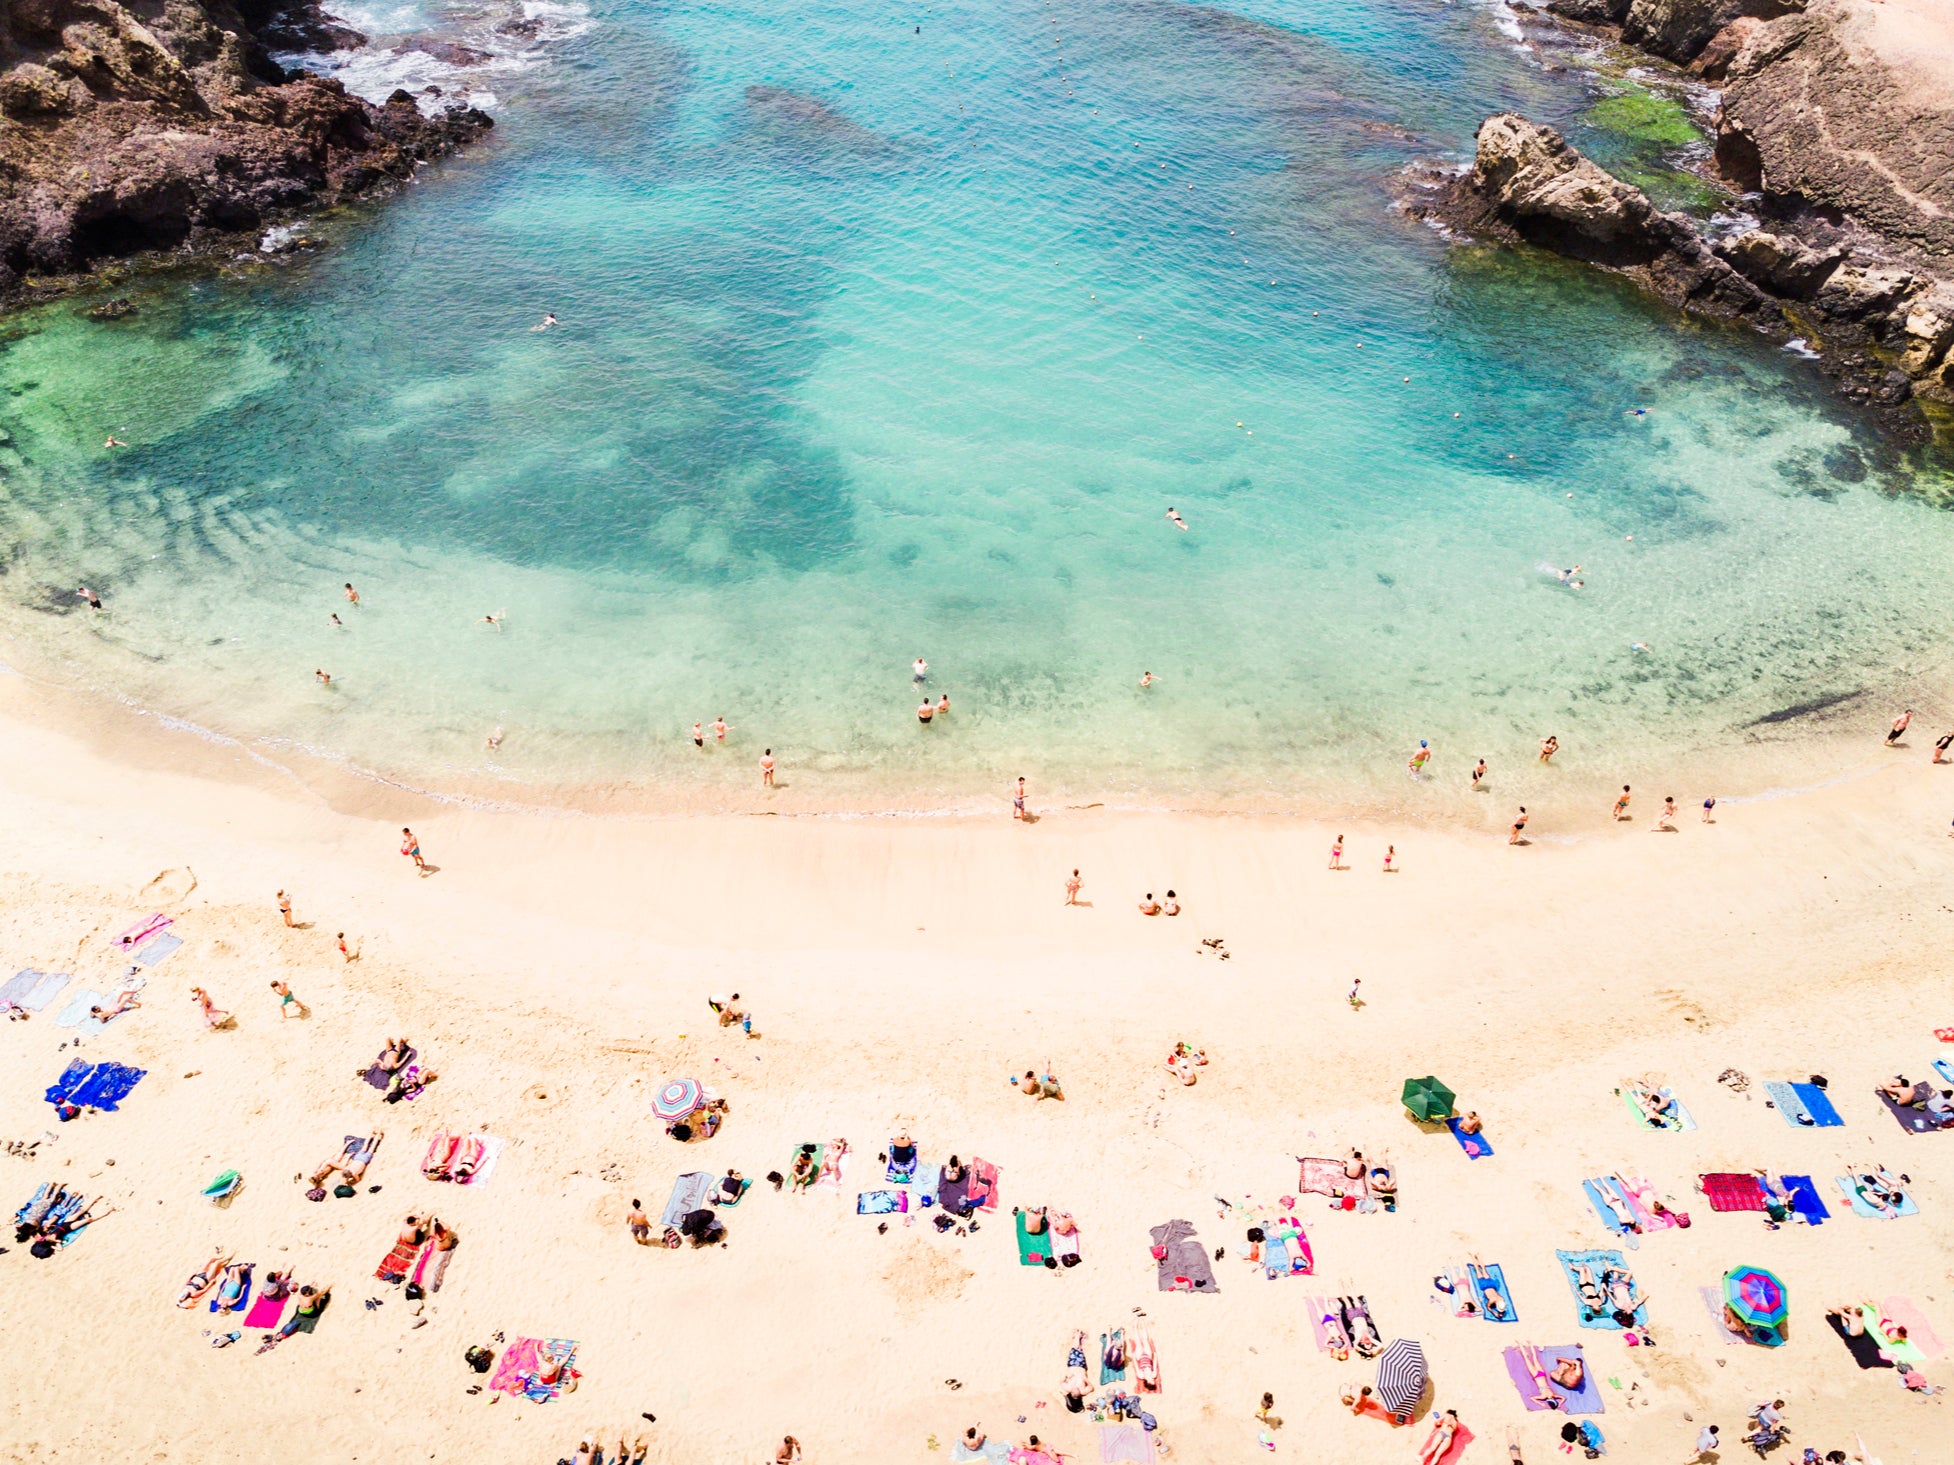 A reader had planned a December trip to Lanzarote